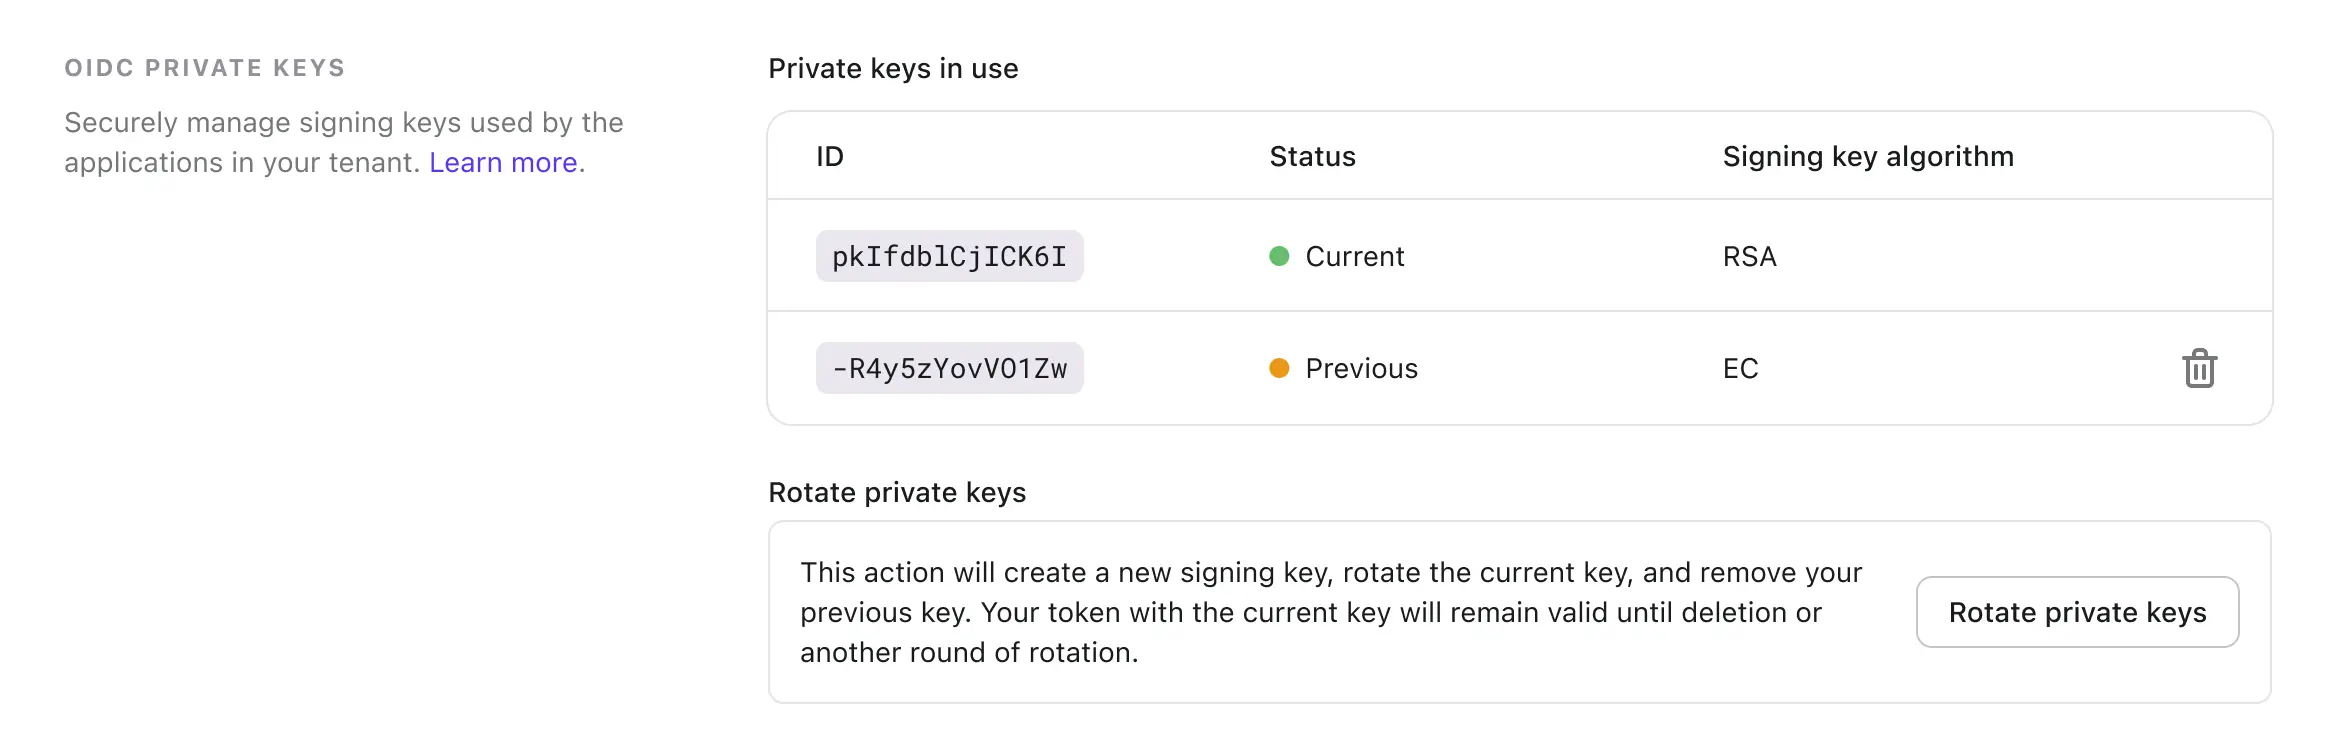 Console UI - Private keys